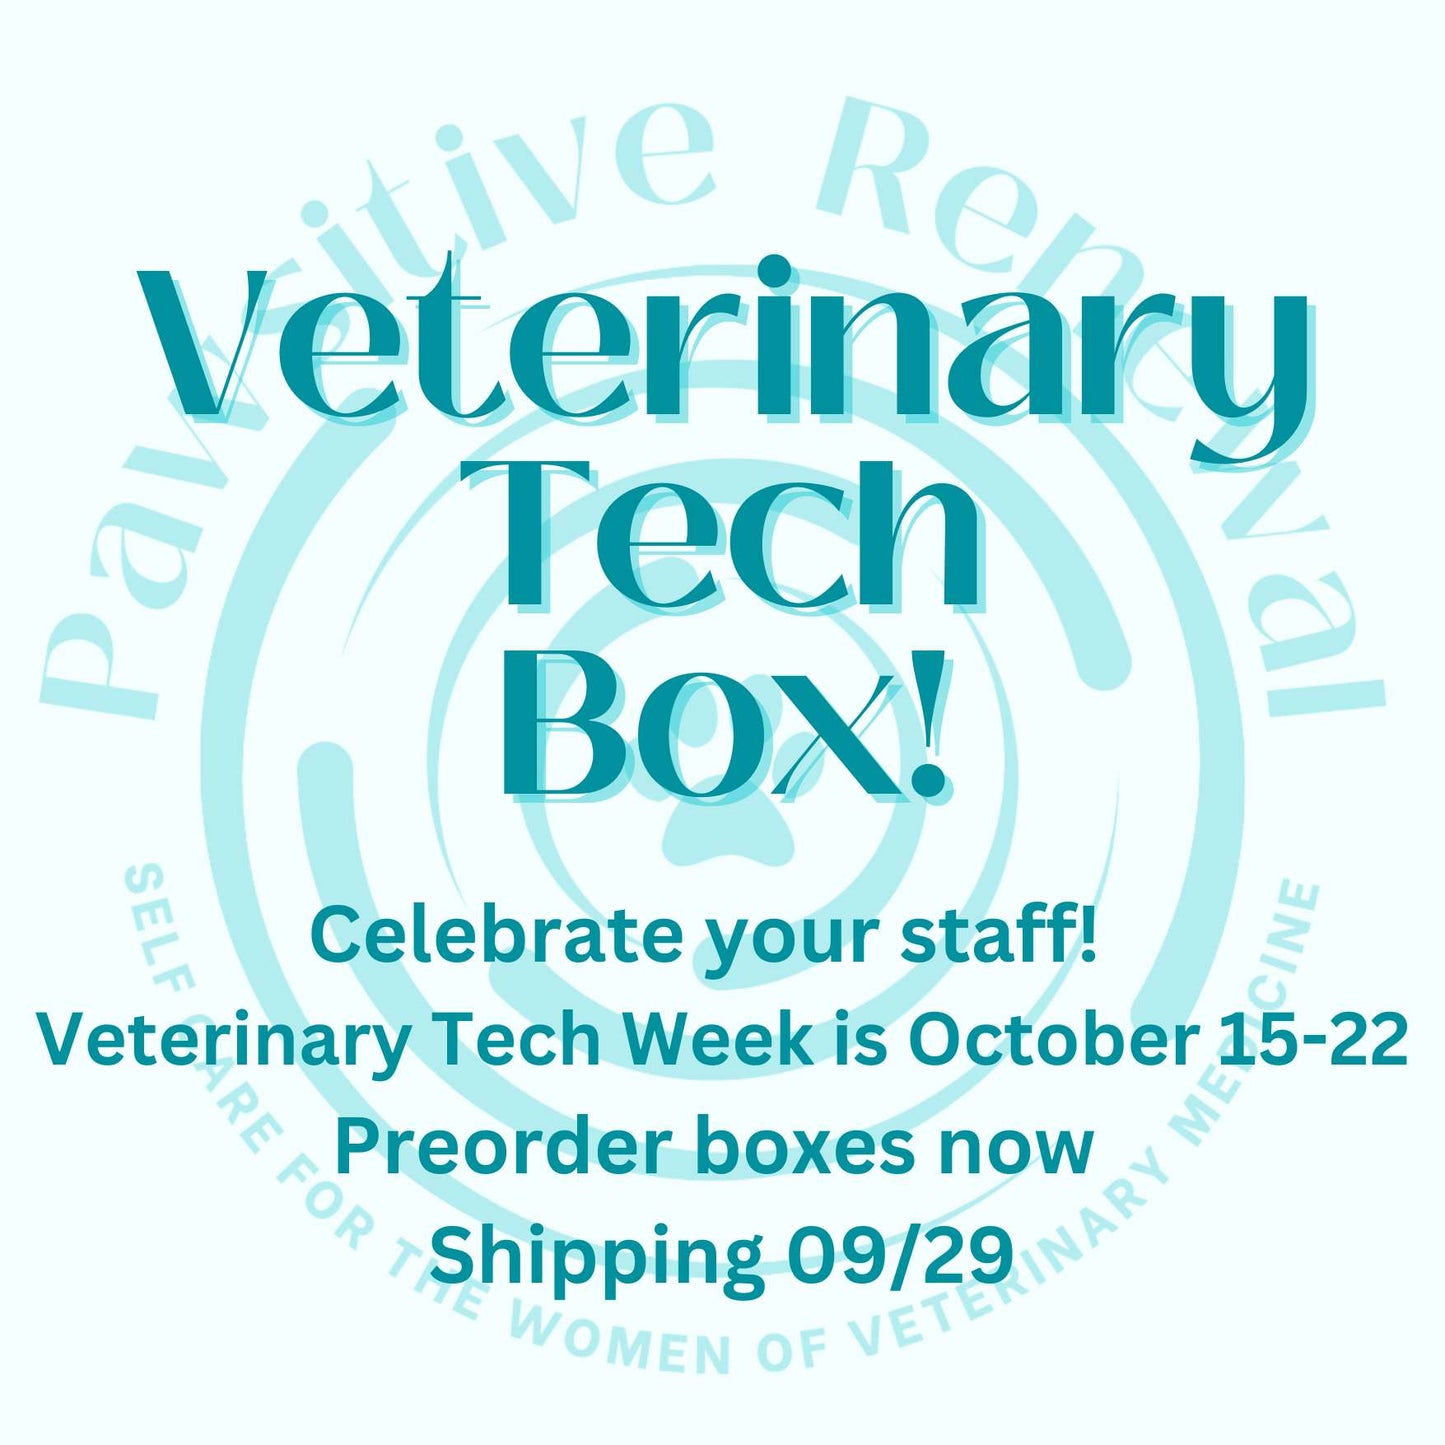 Veterinary Tech Pawsitive Renewal Box - T shirt size 2XL